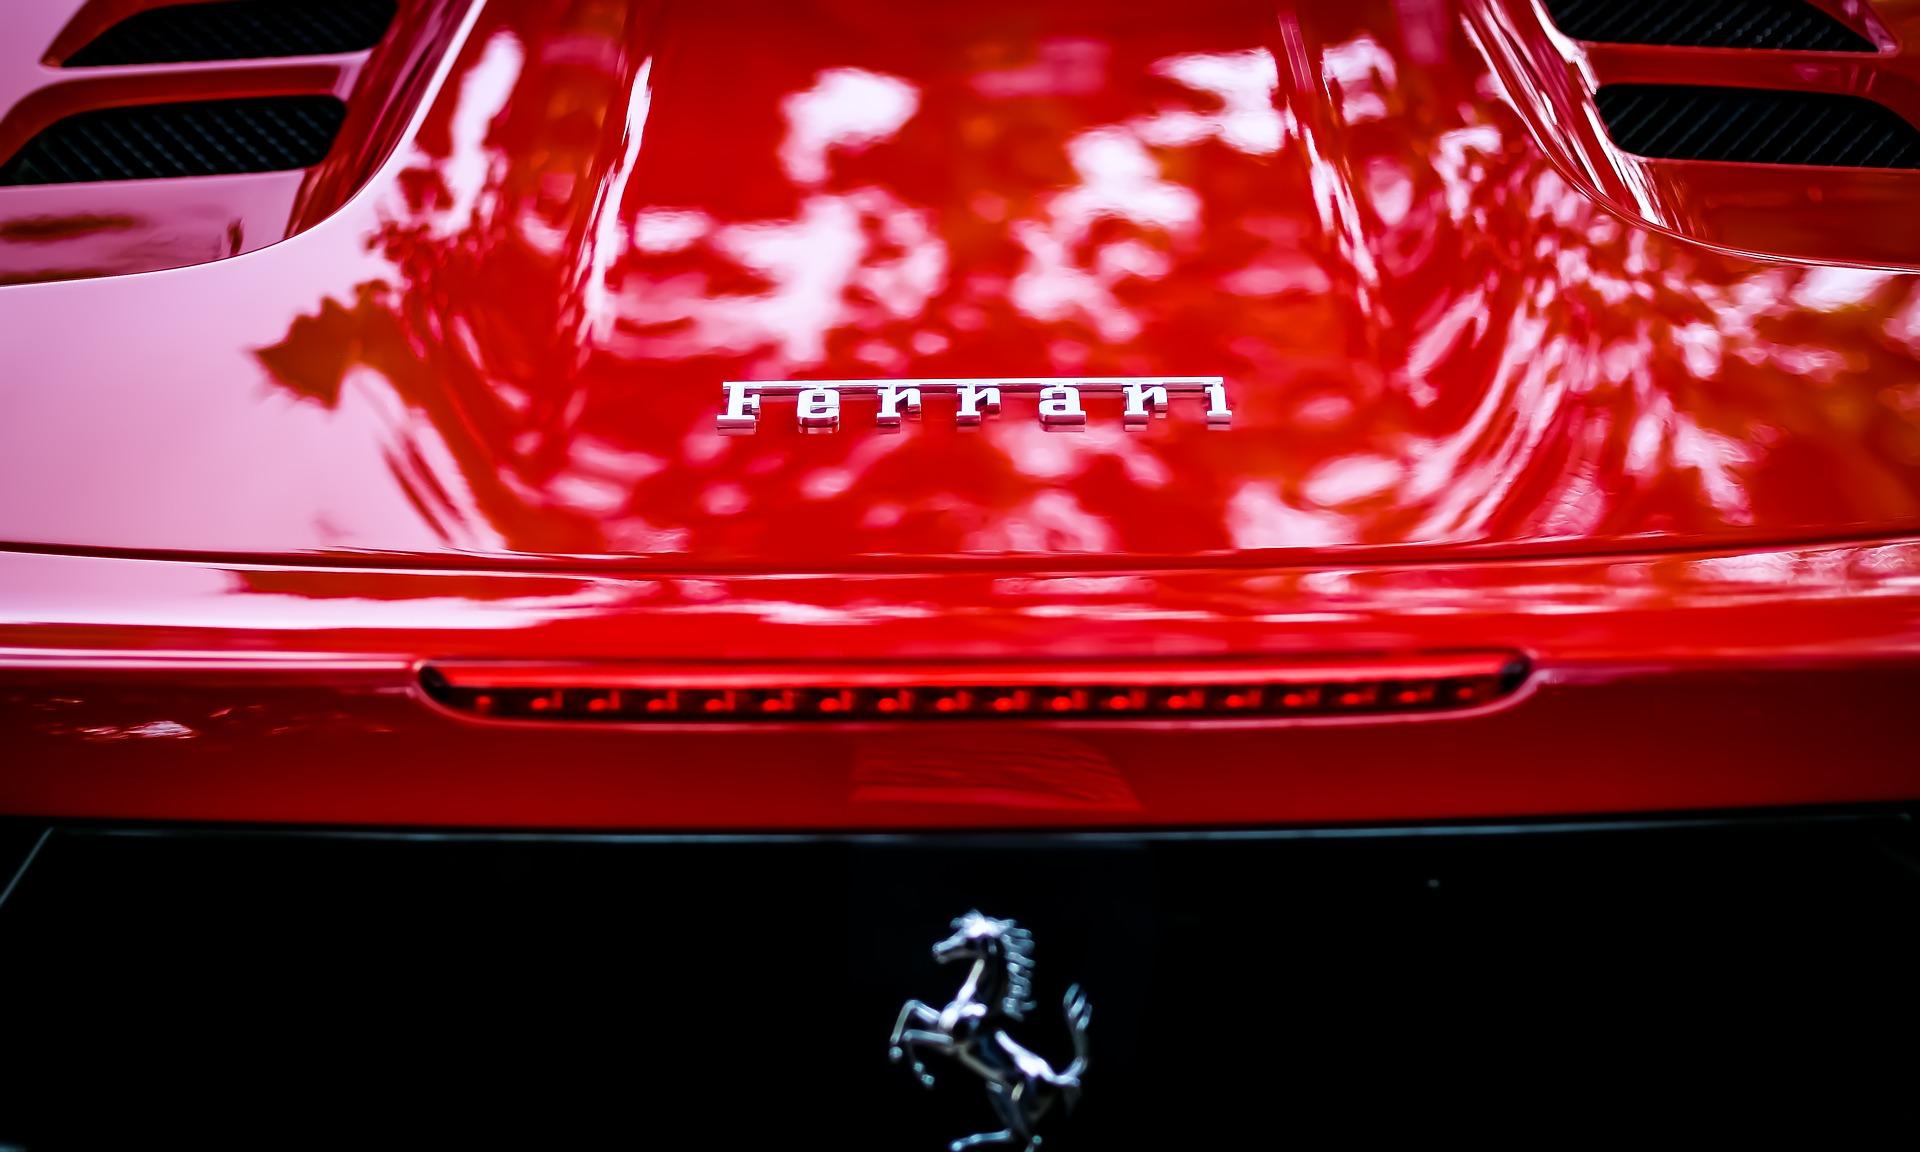 The back of a red Ferrari 